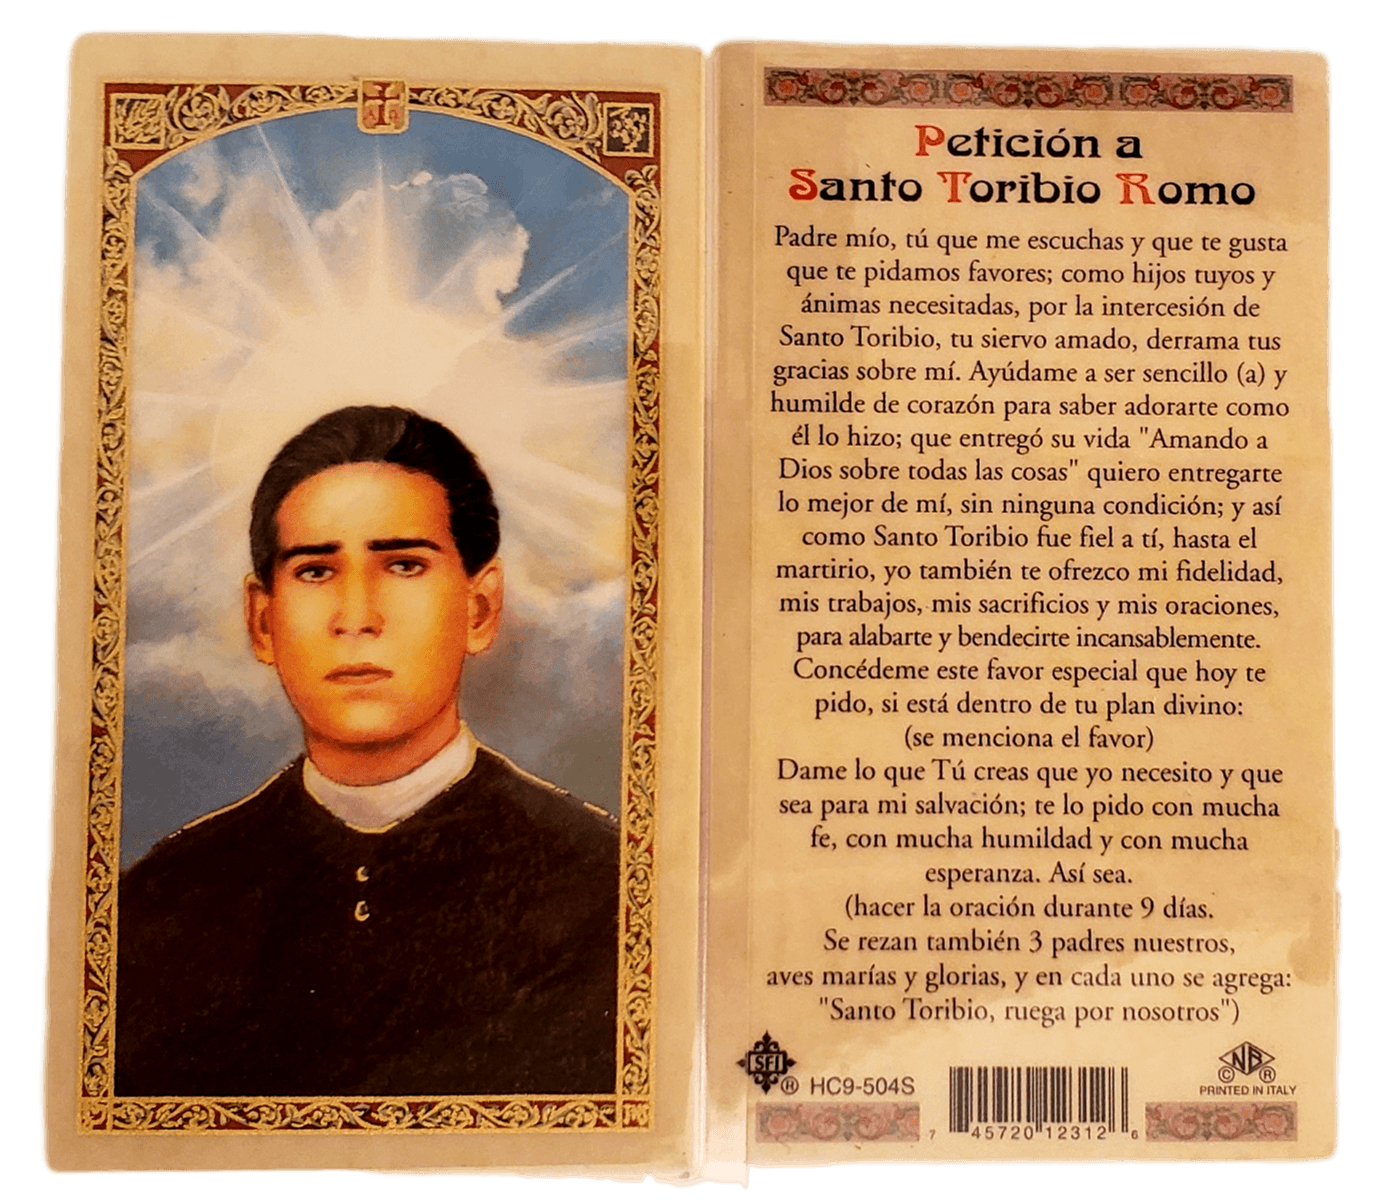 Prayer Card Peticion A Santo Toribio Romo SPANISH Laminated HC9-504S - Ysleta Mission Gift Shop- VOTED El Paso's Best Gift Shop